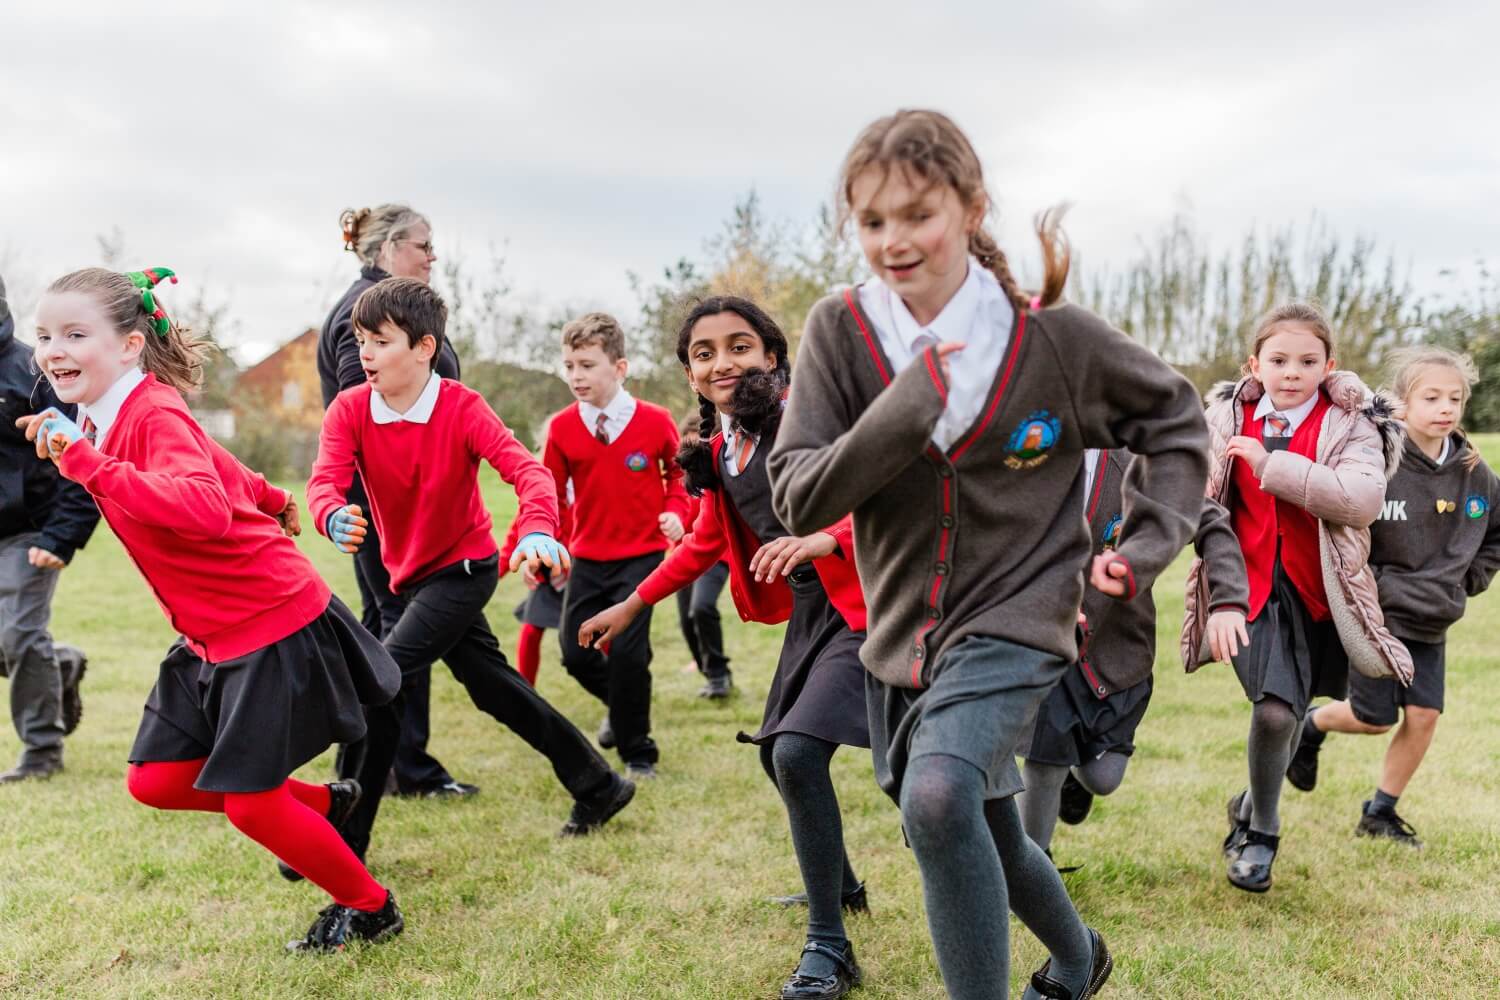 School children running across their grassy school grounds on Outdoor Classroom Day.